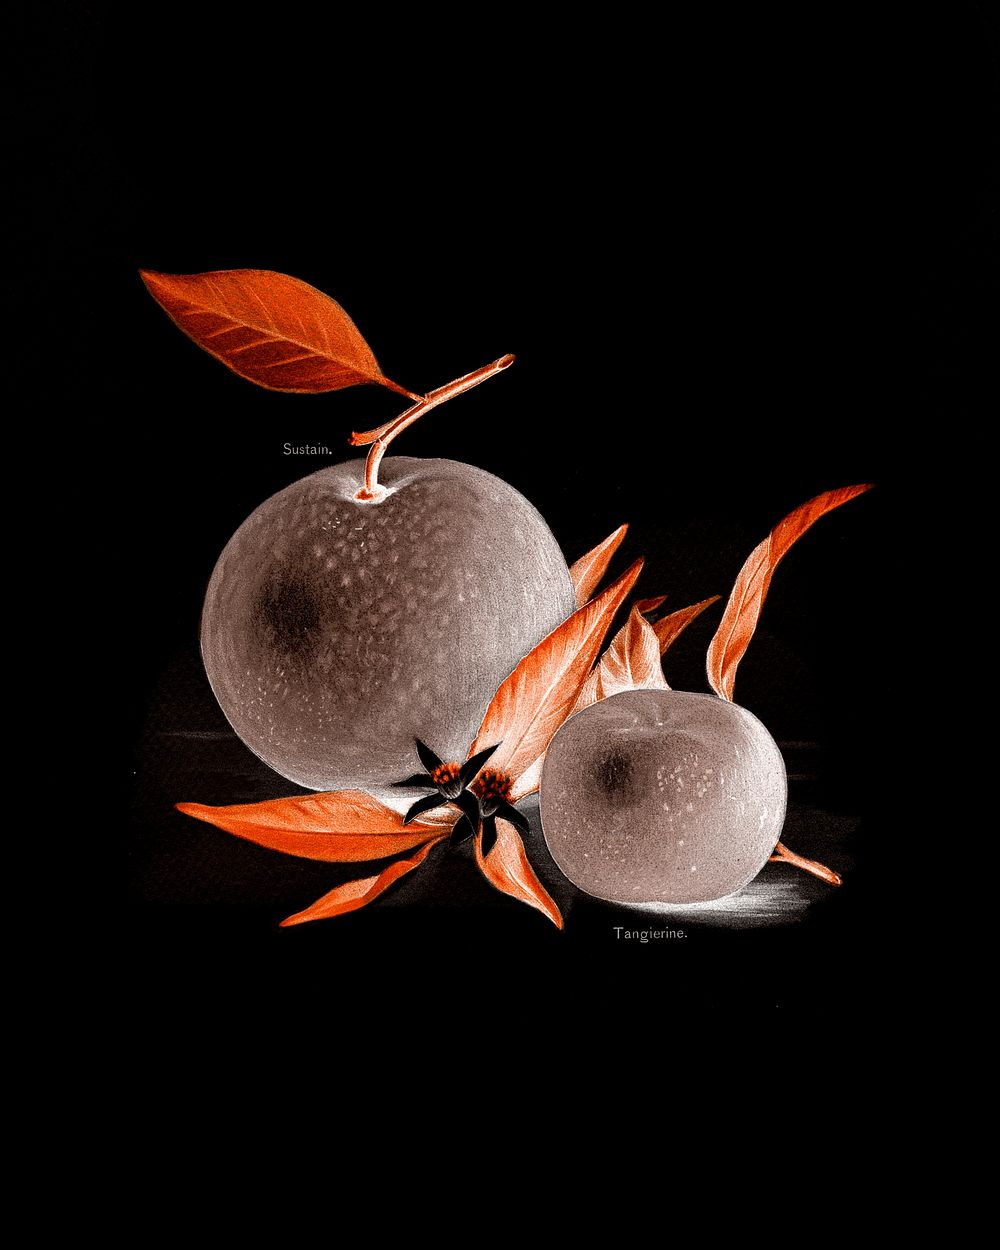 Oranges with negative effect vintage wall art print poster design remix from original artwork.